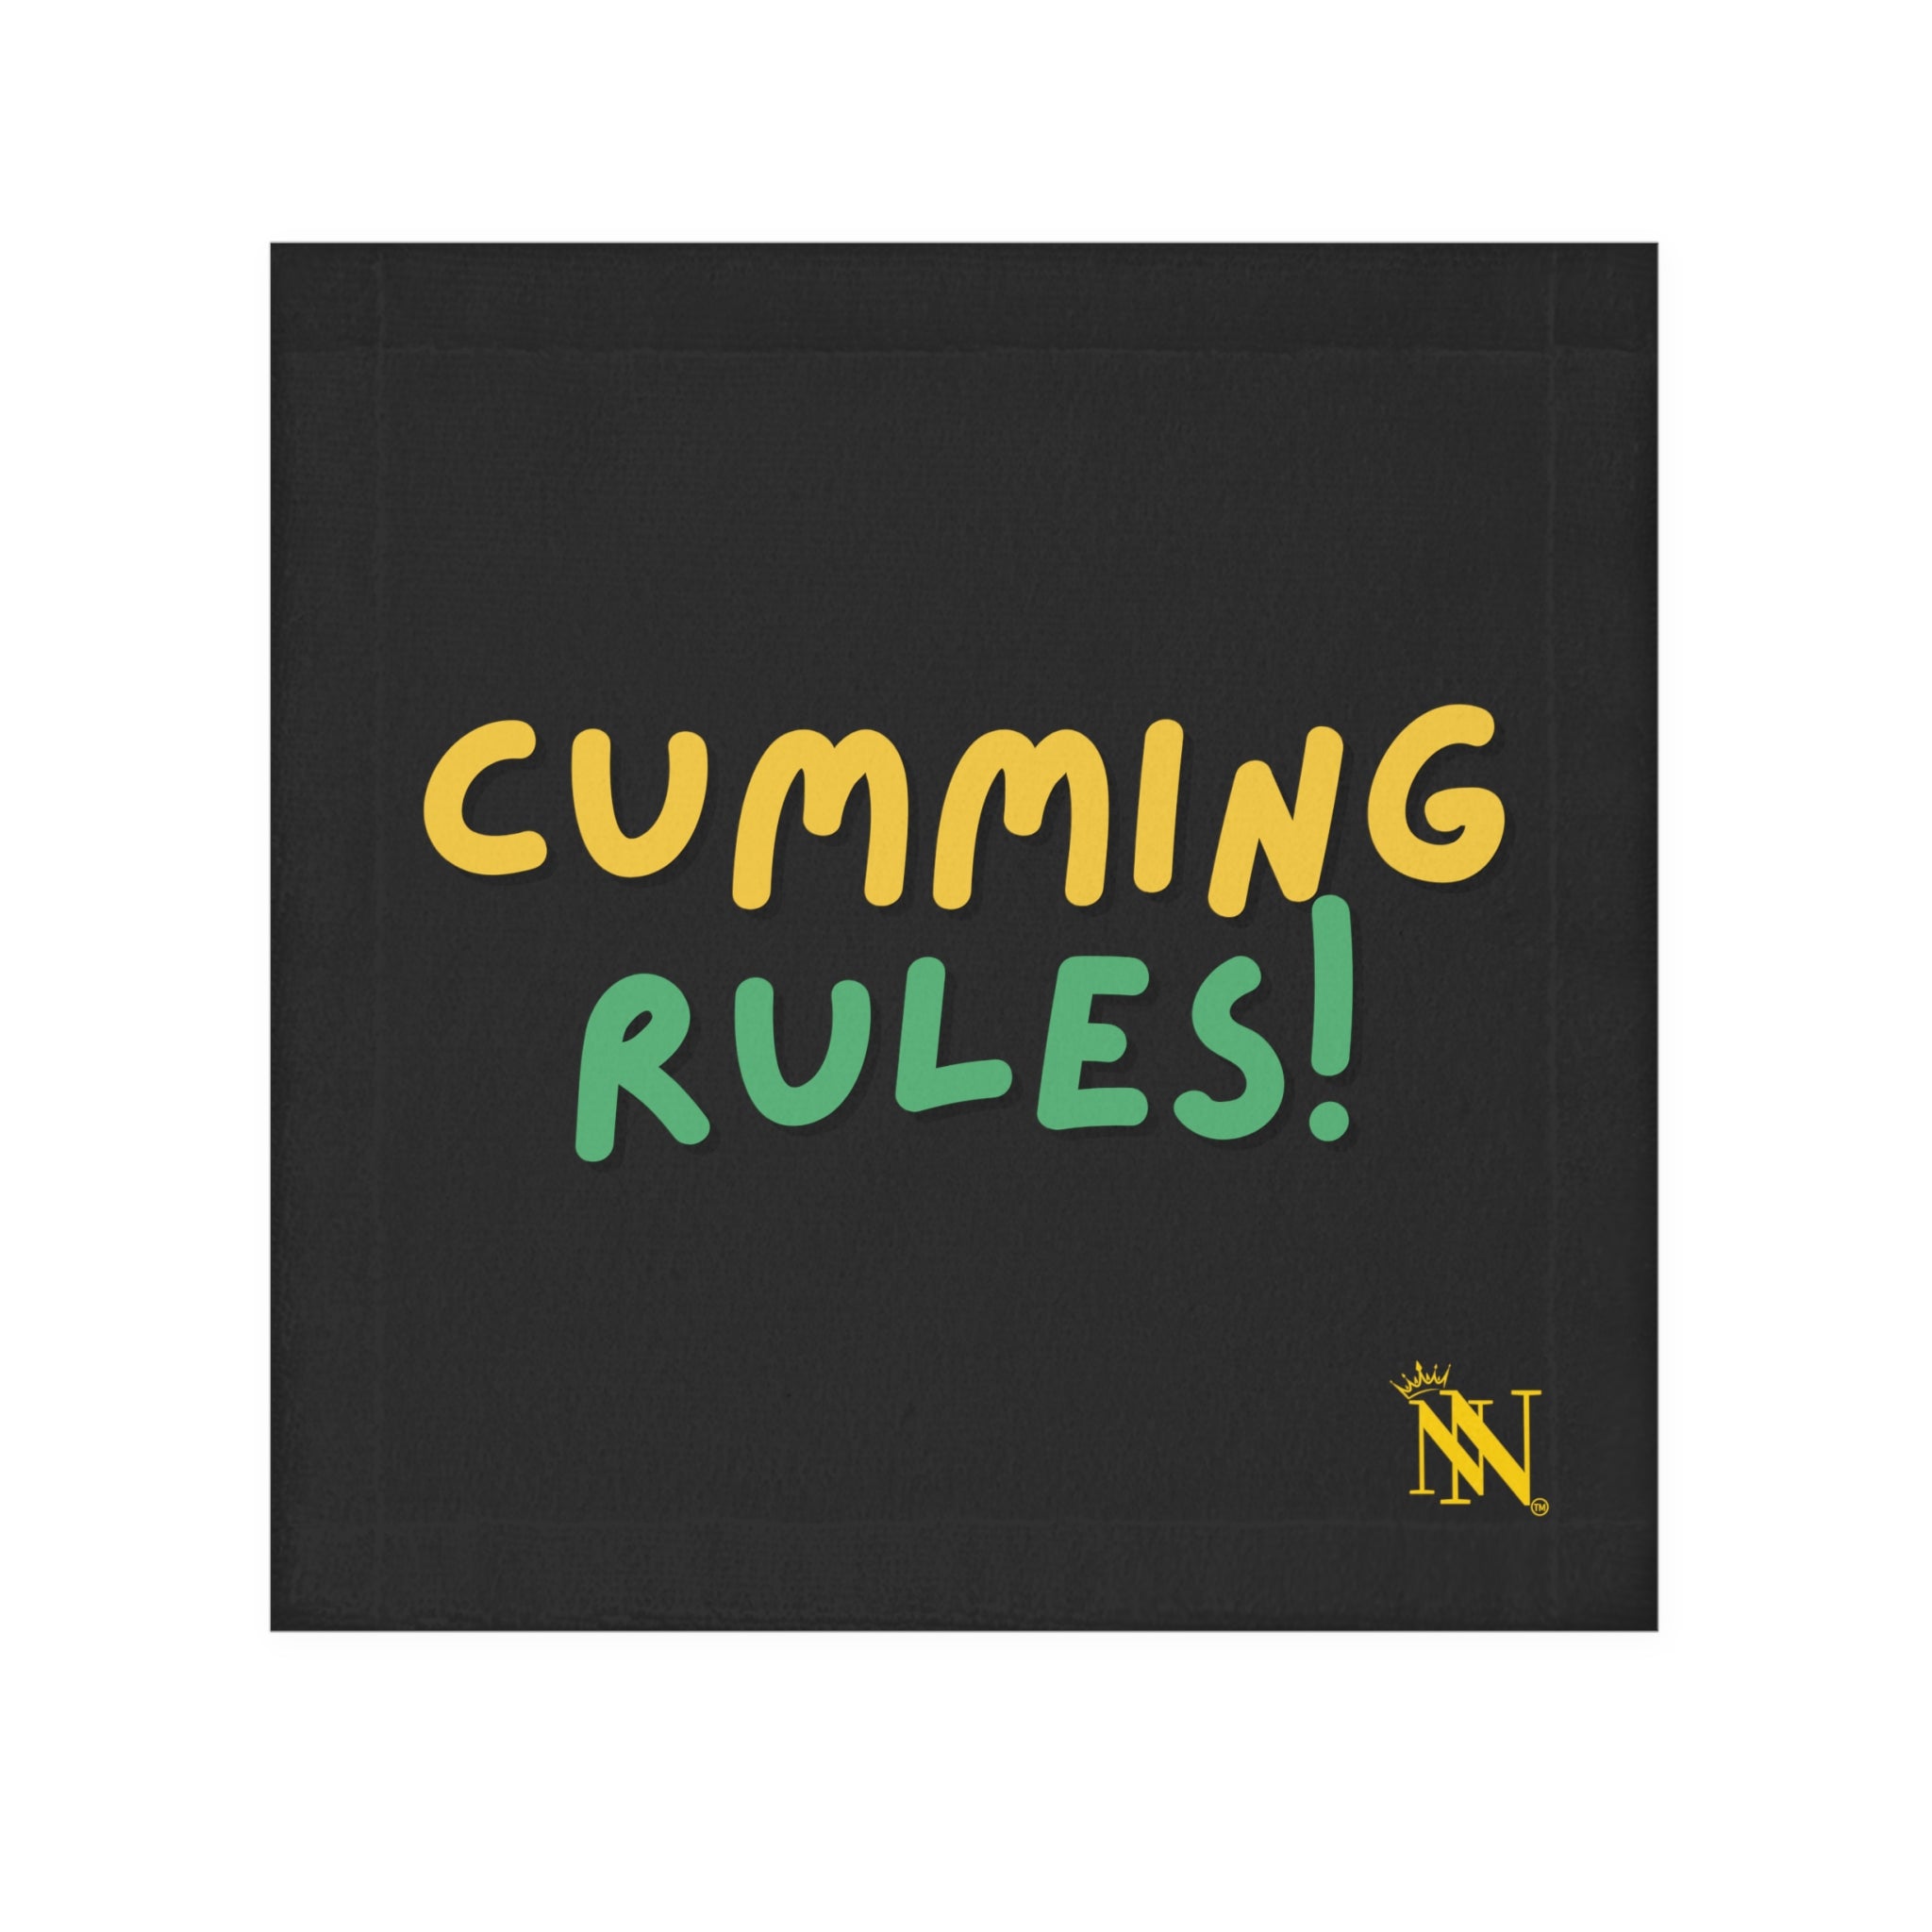 Cumming rules sex towel